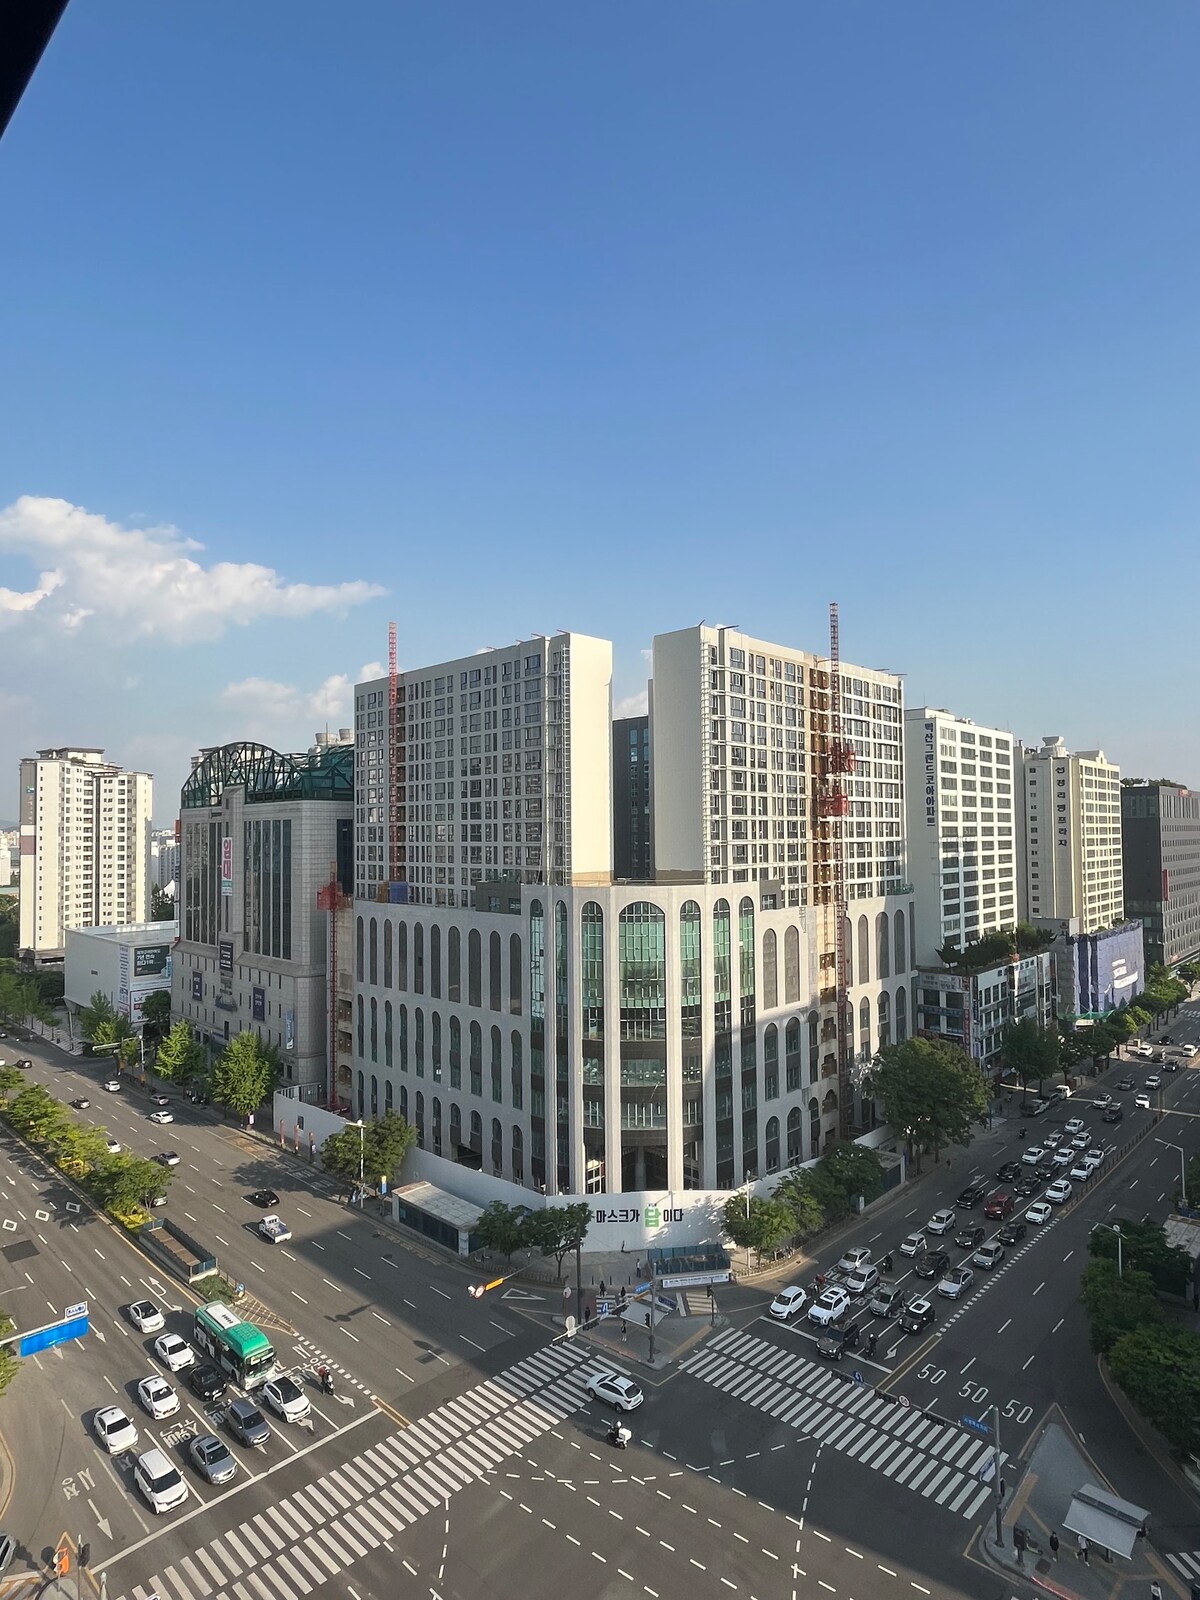 Ingye-dong/Suwon市政厅站/派对室/长期折扣/提前入住咨询